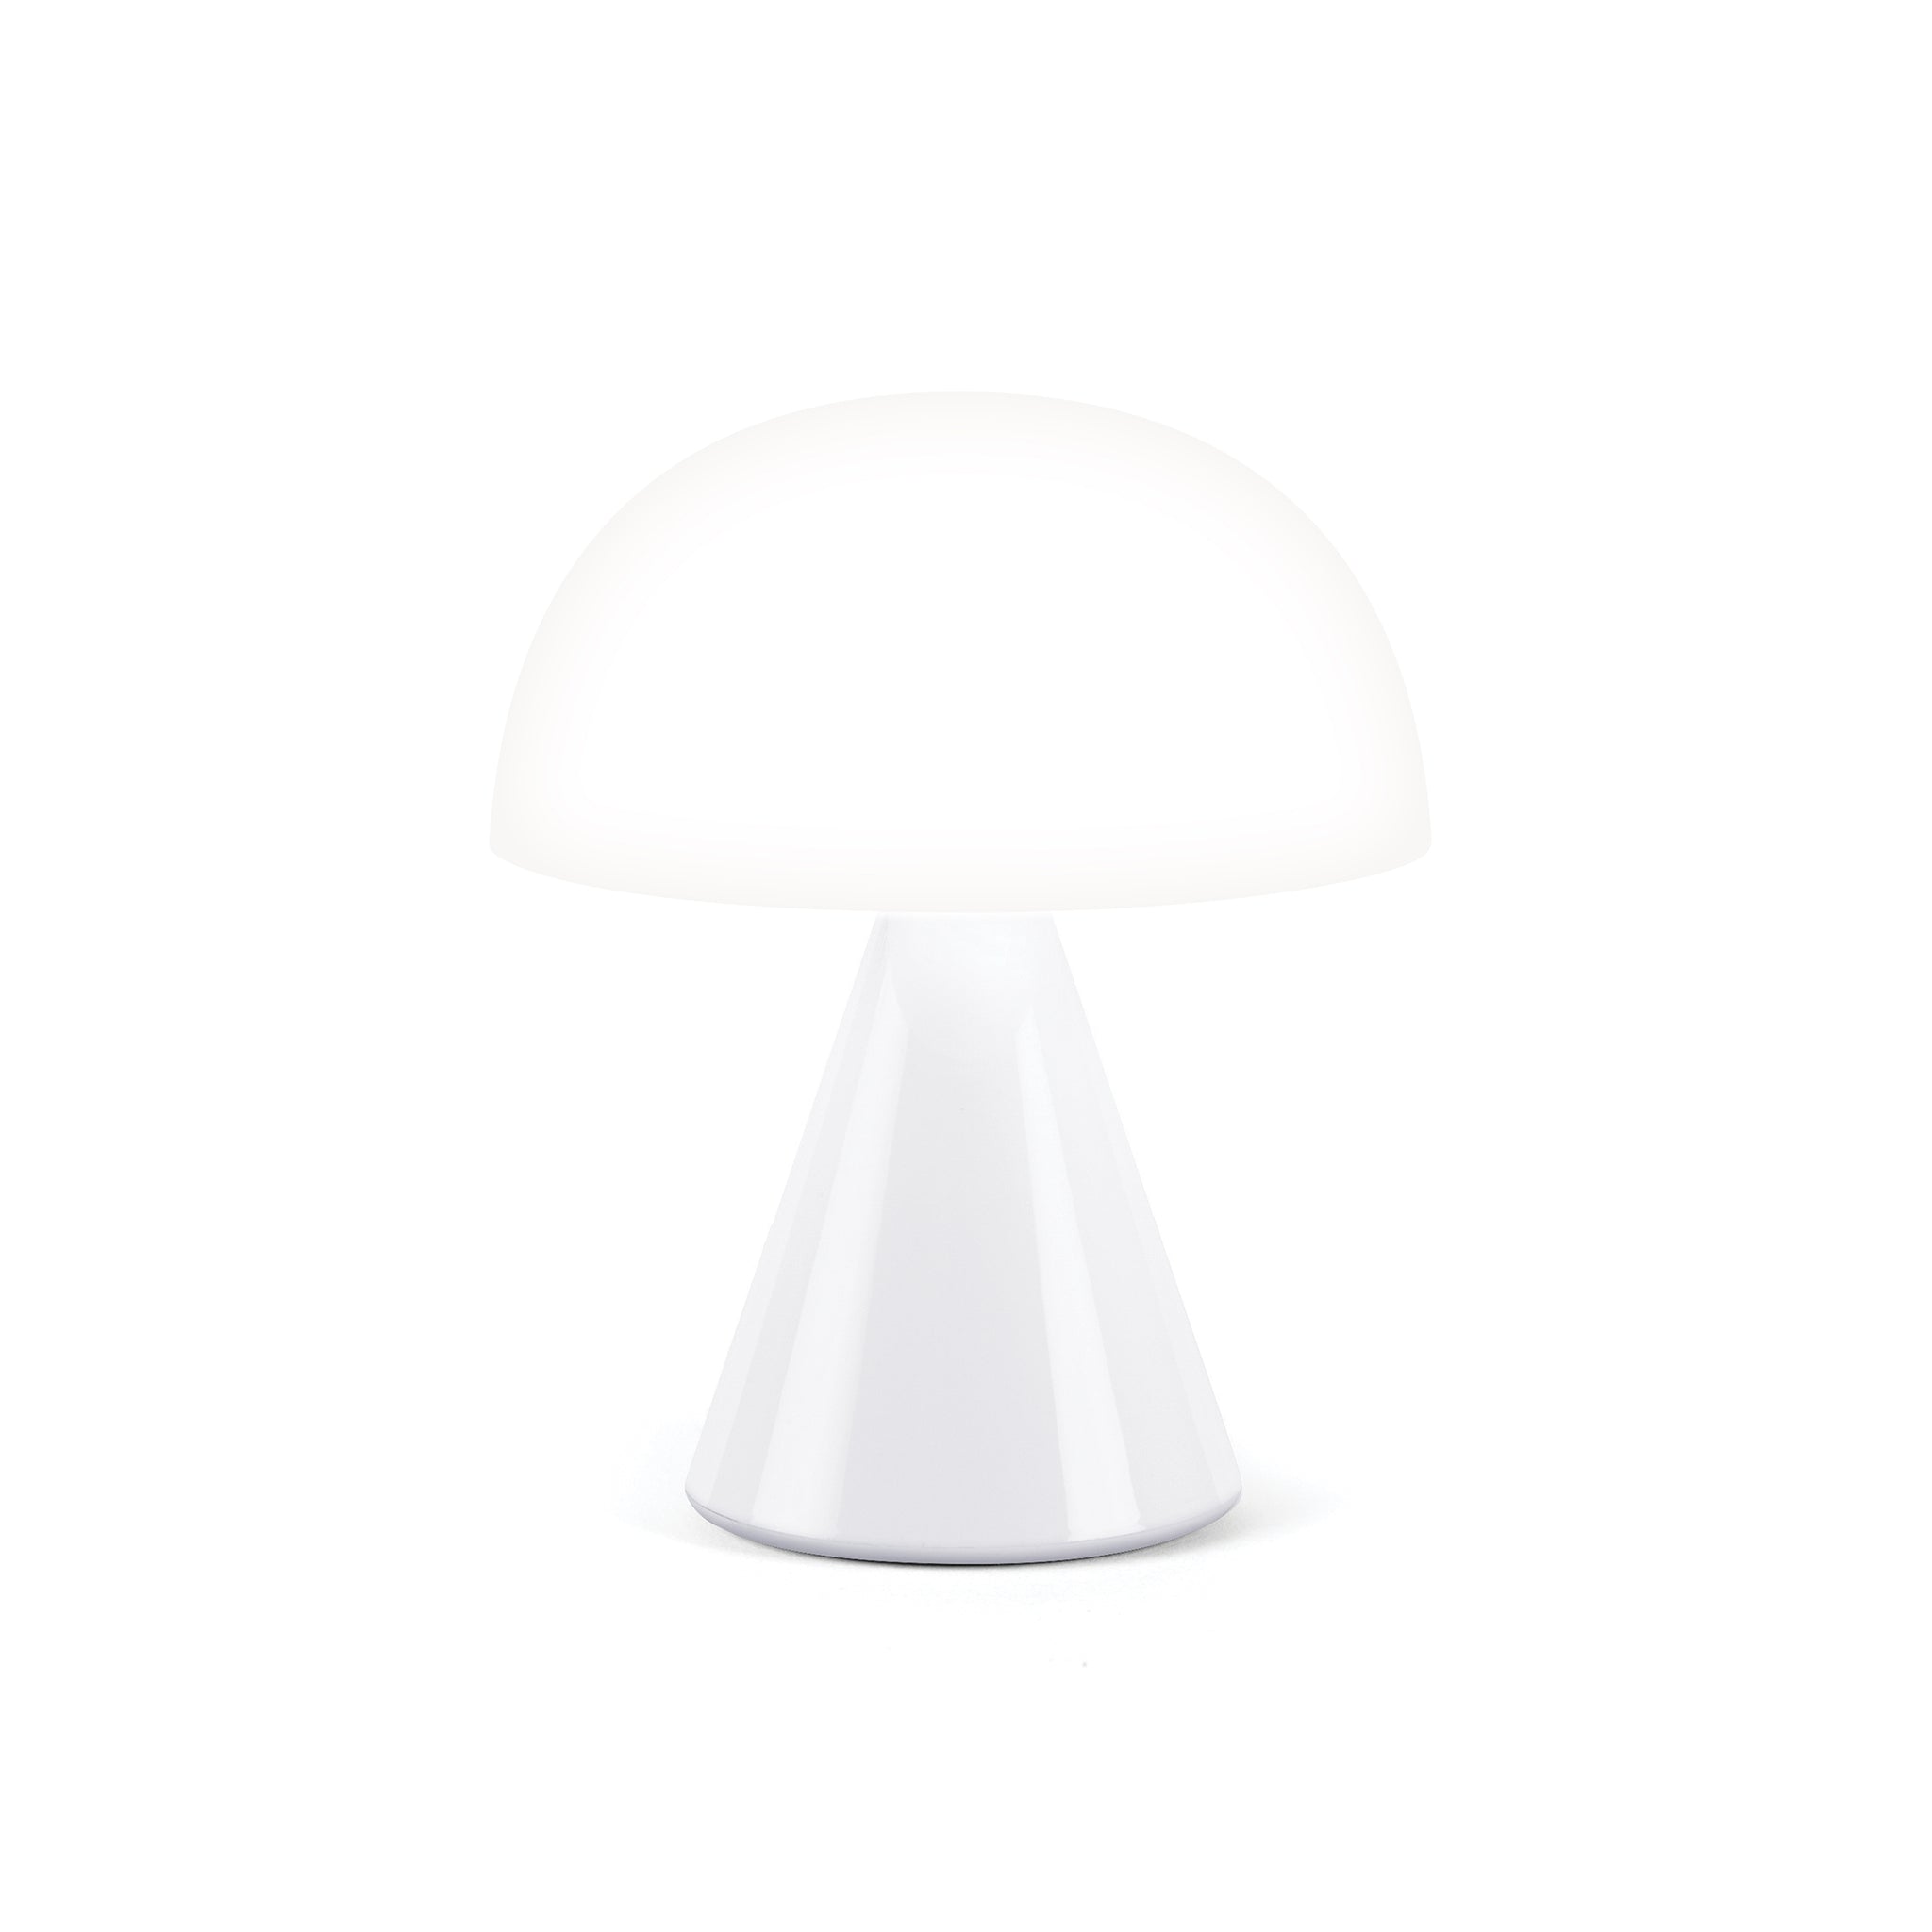 Lexon Mina Medium Glossy White│Oplaadbare LED-Lamp│art. LH64WG│vooraanzicht met wit licht aan